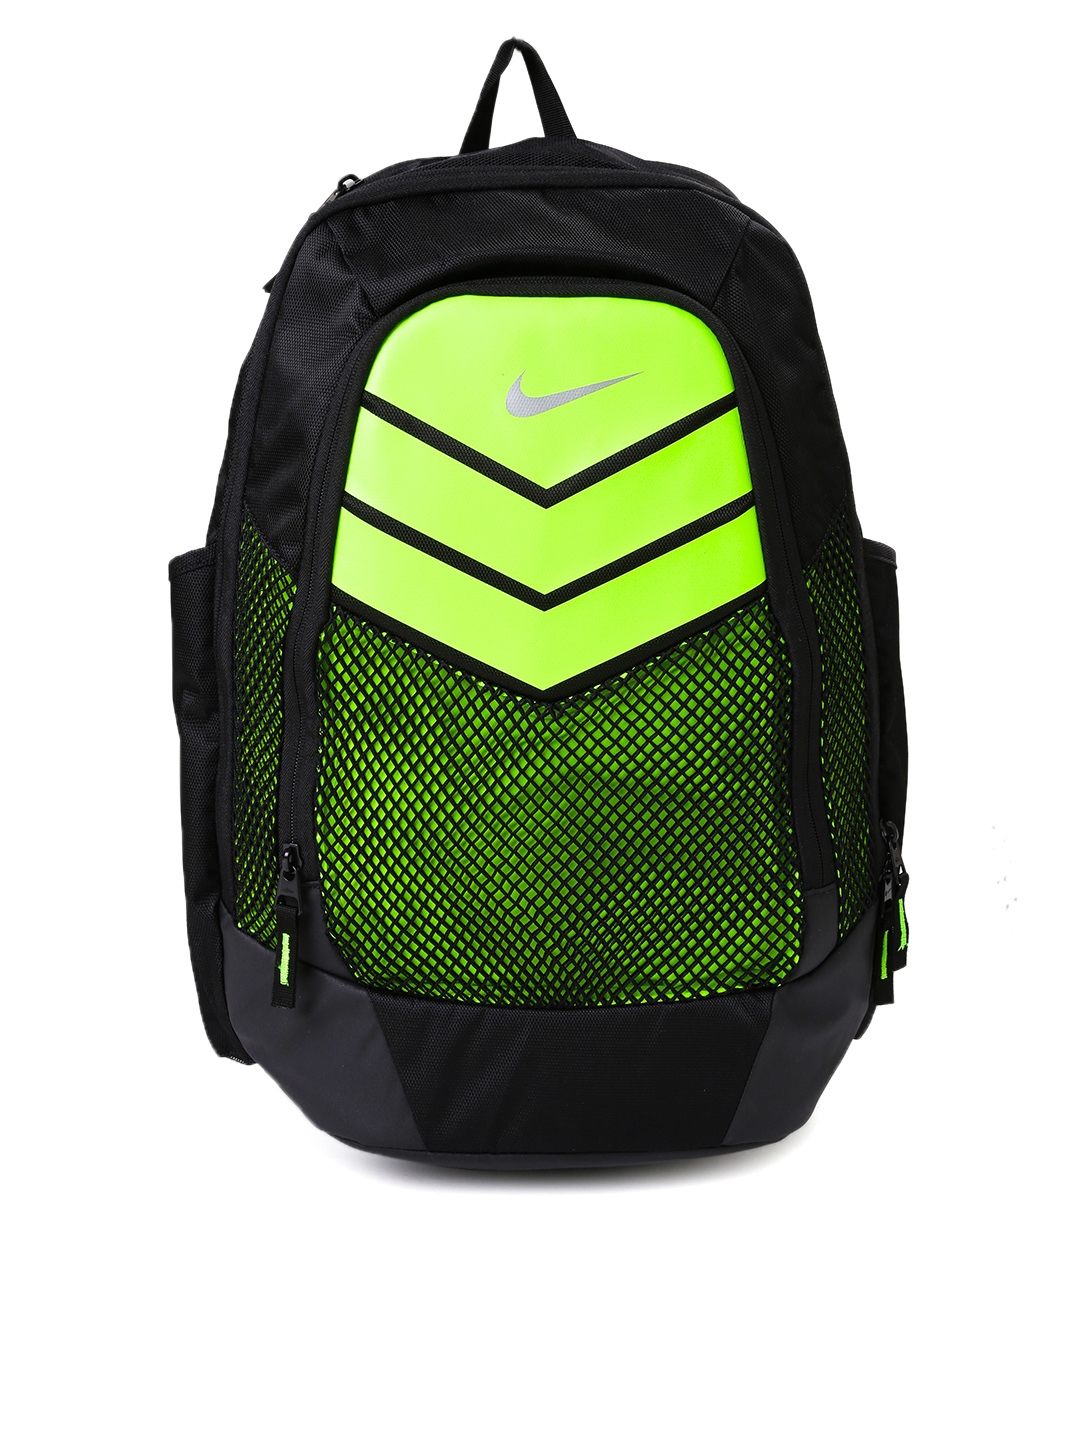 nike air max backpack neon